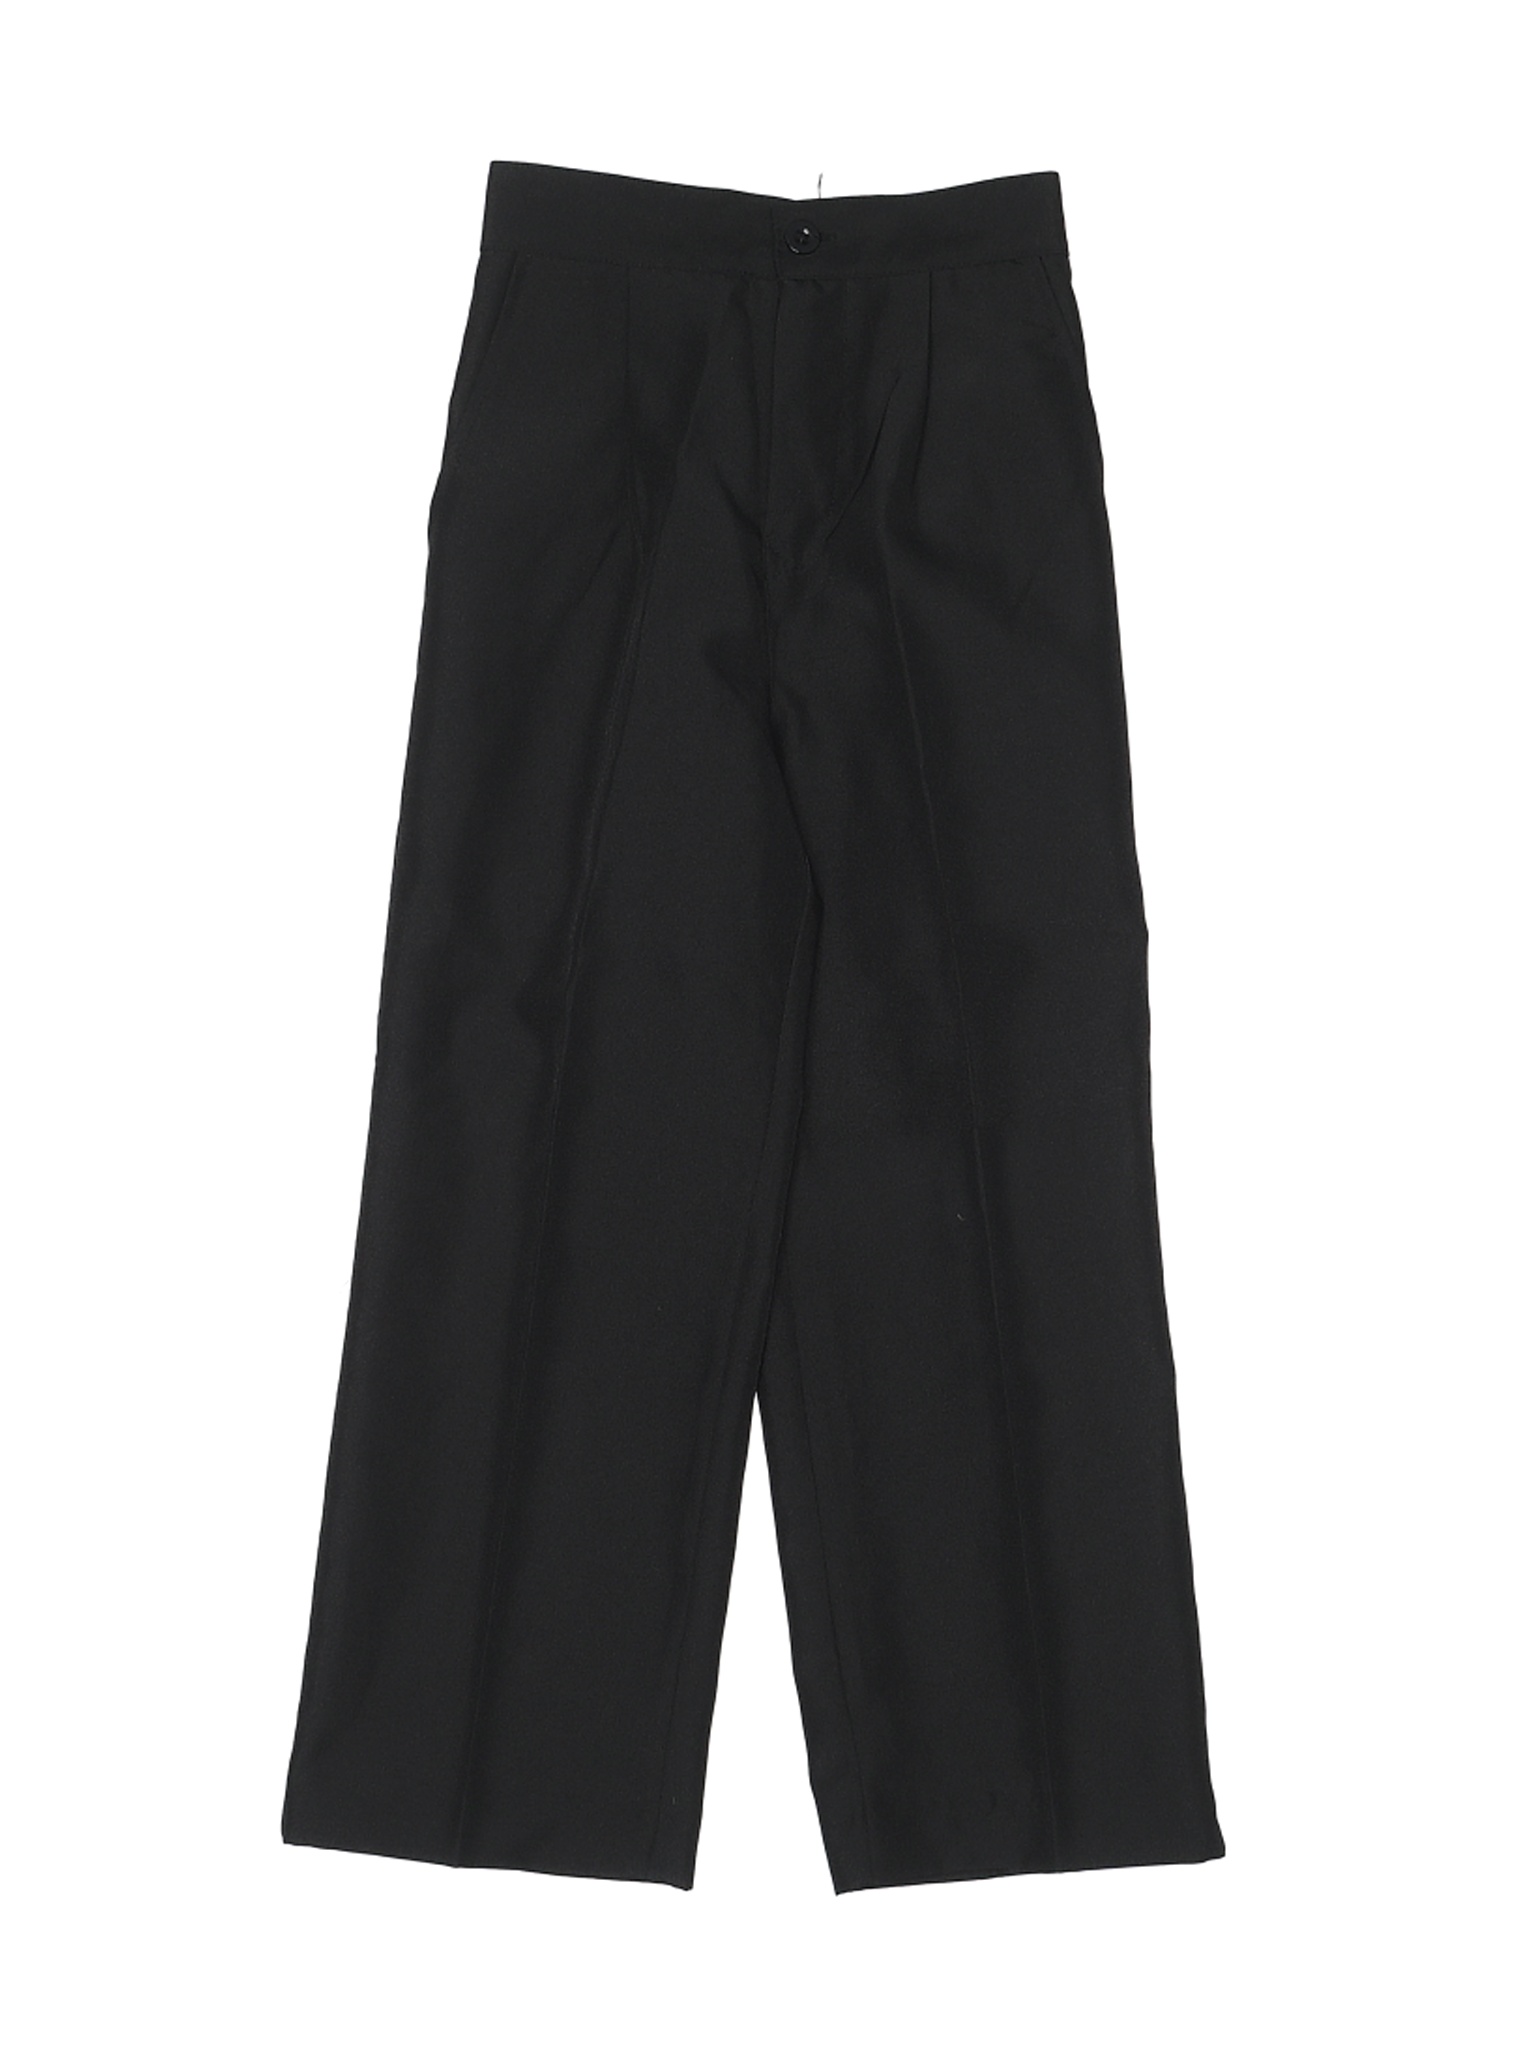 Unbranded Boys Black Dress Pants 8 | eBay